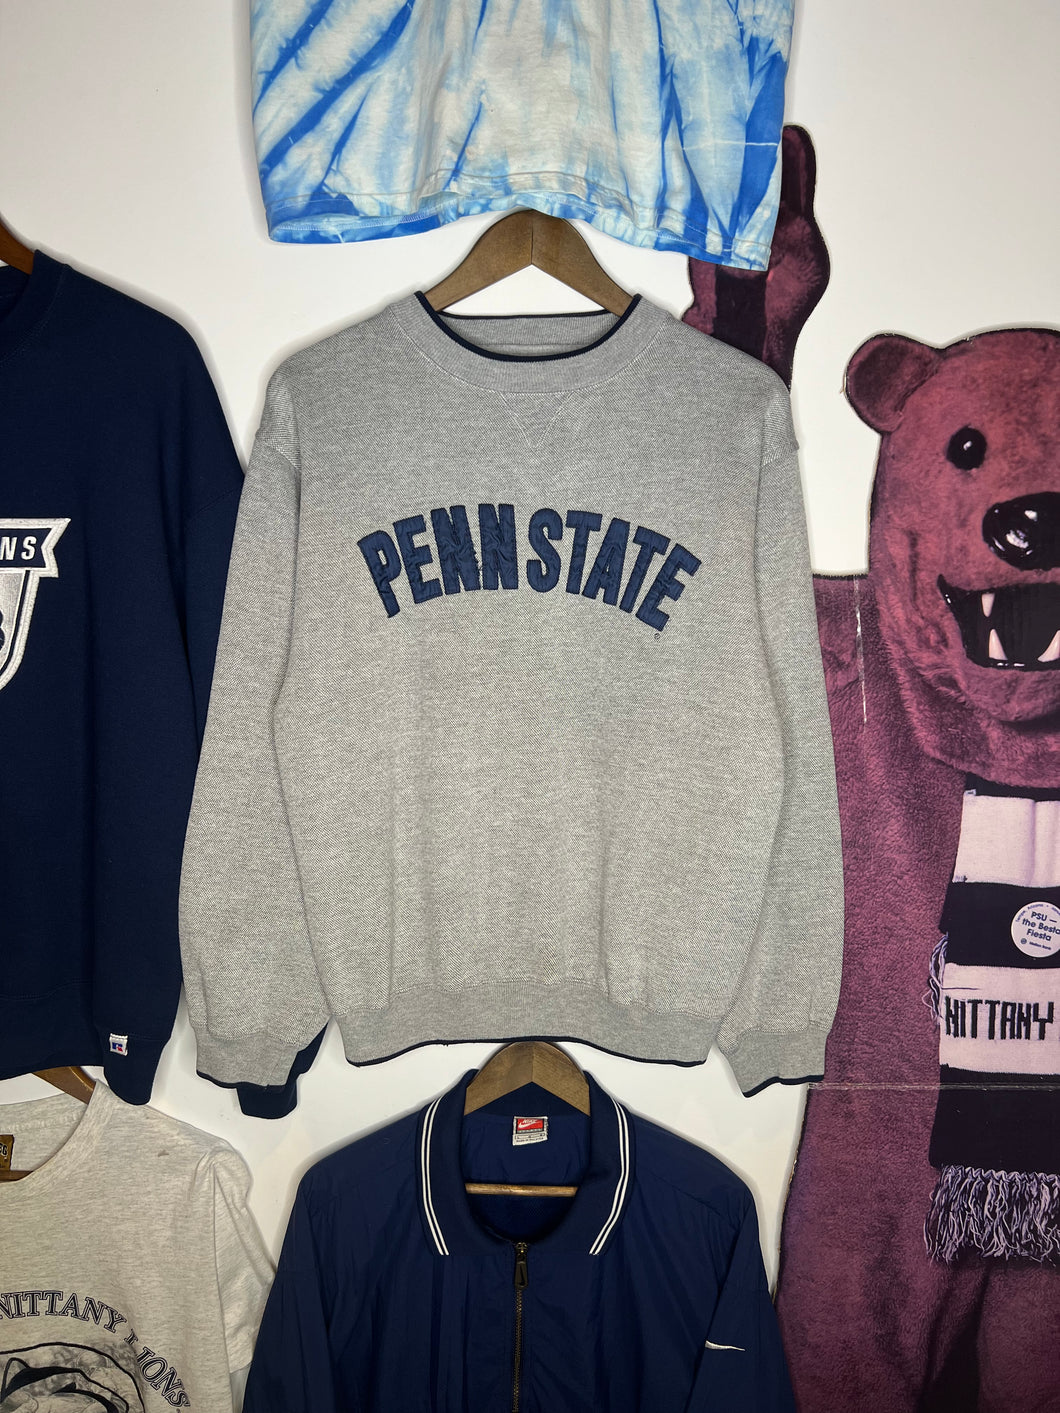 Vintage Penn State Textured Crewneck (S)